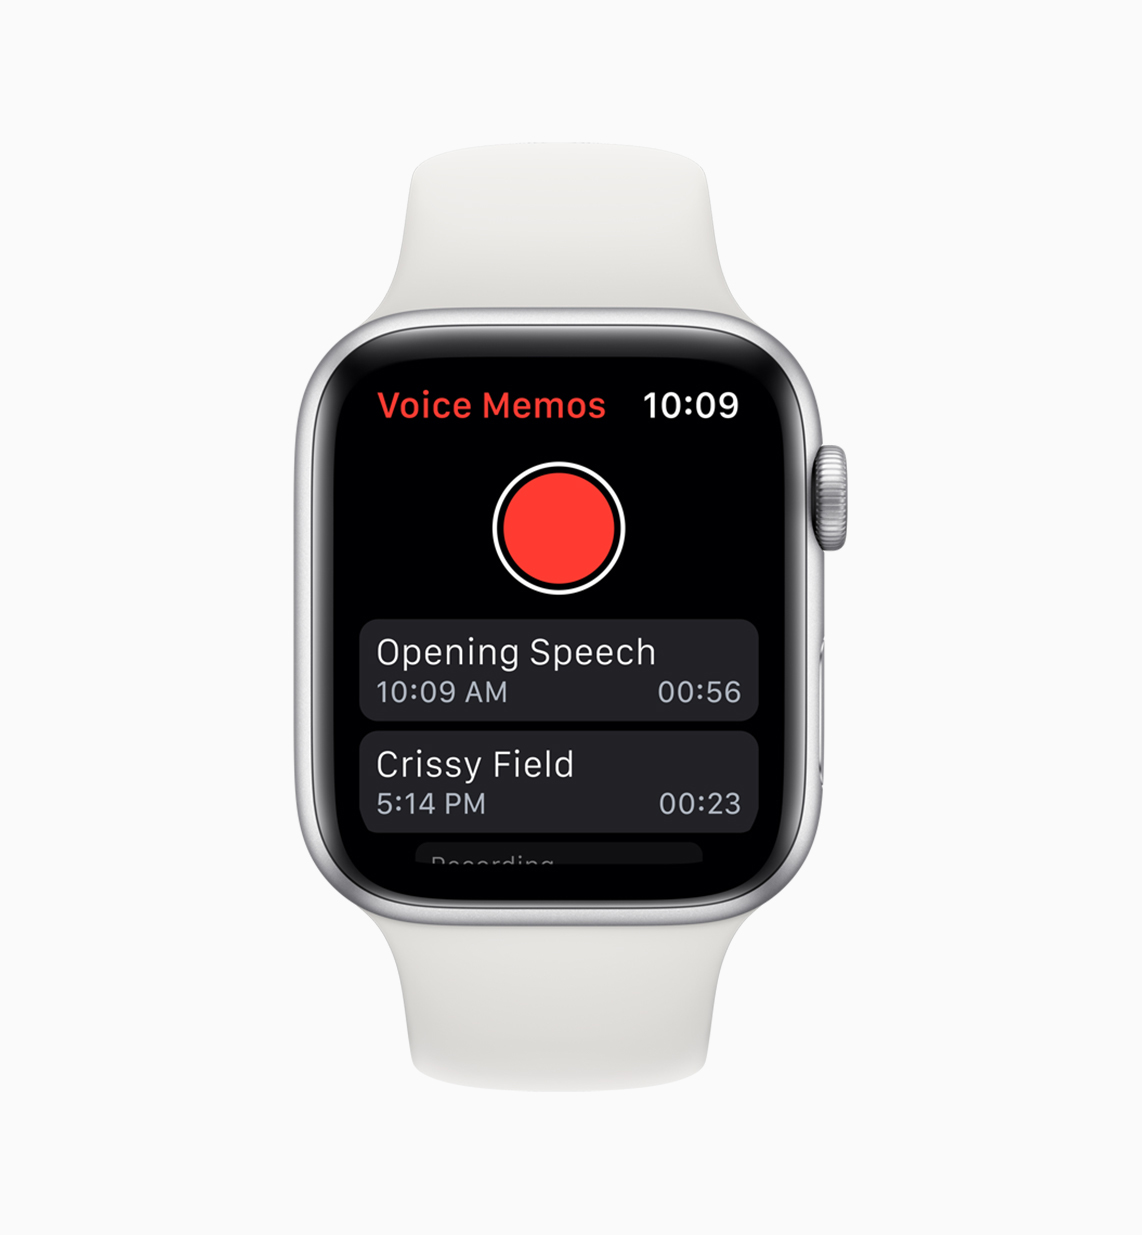 Apple Debuts watchOS 6 for Apple Watch